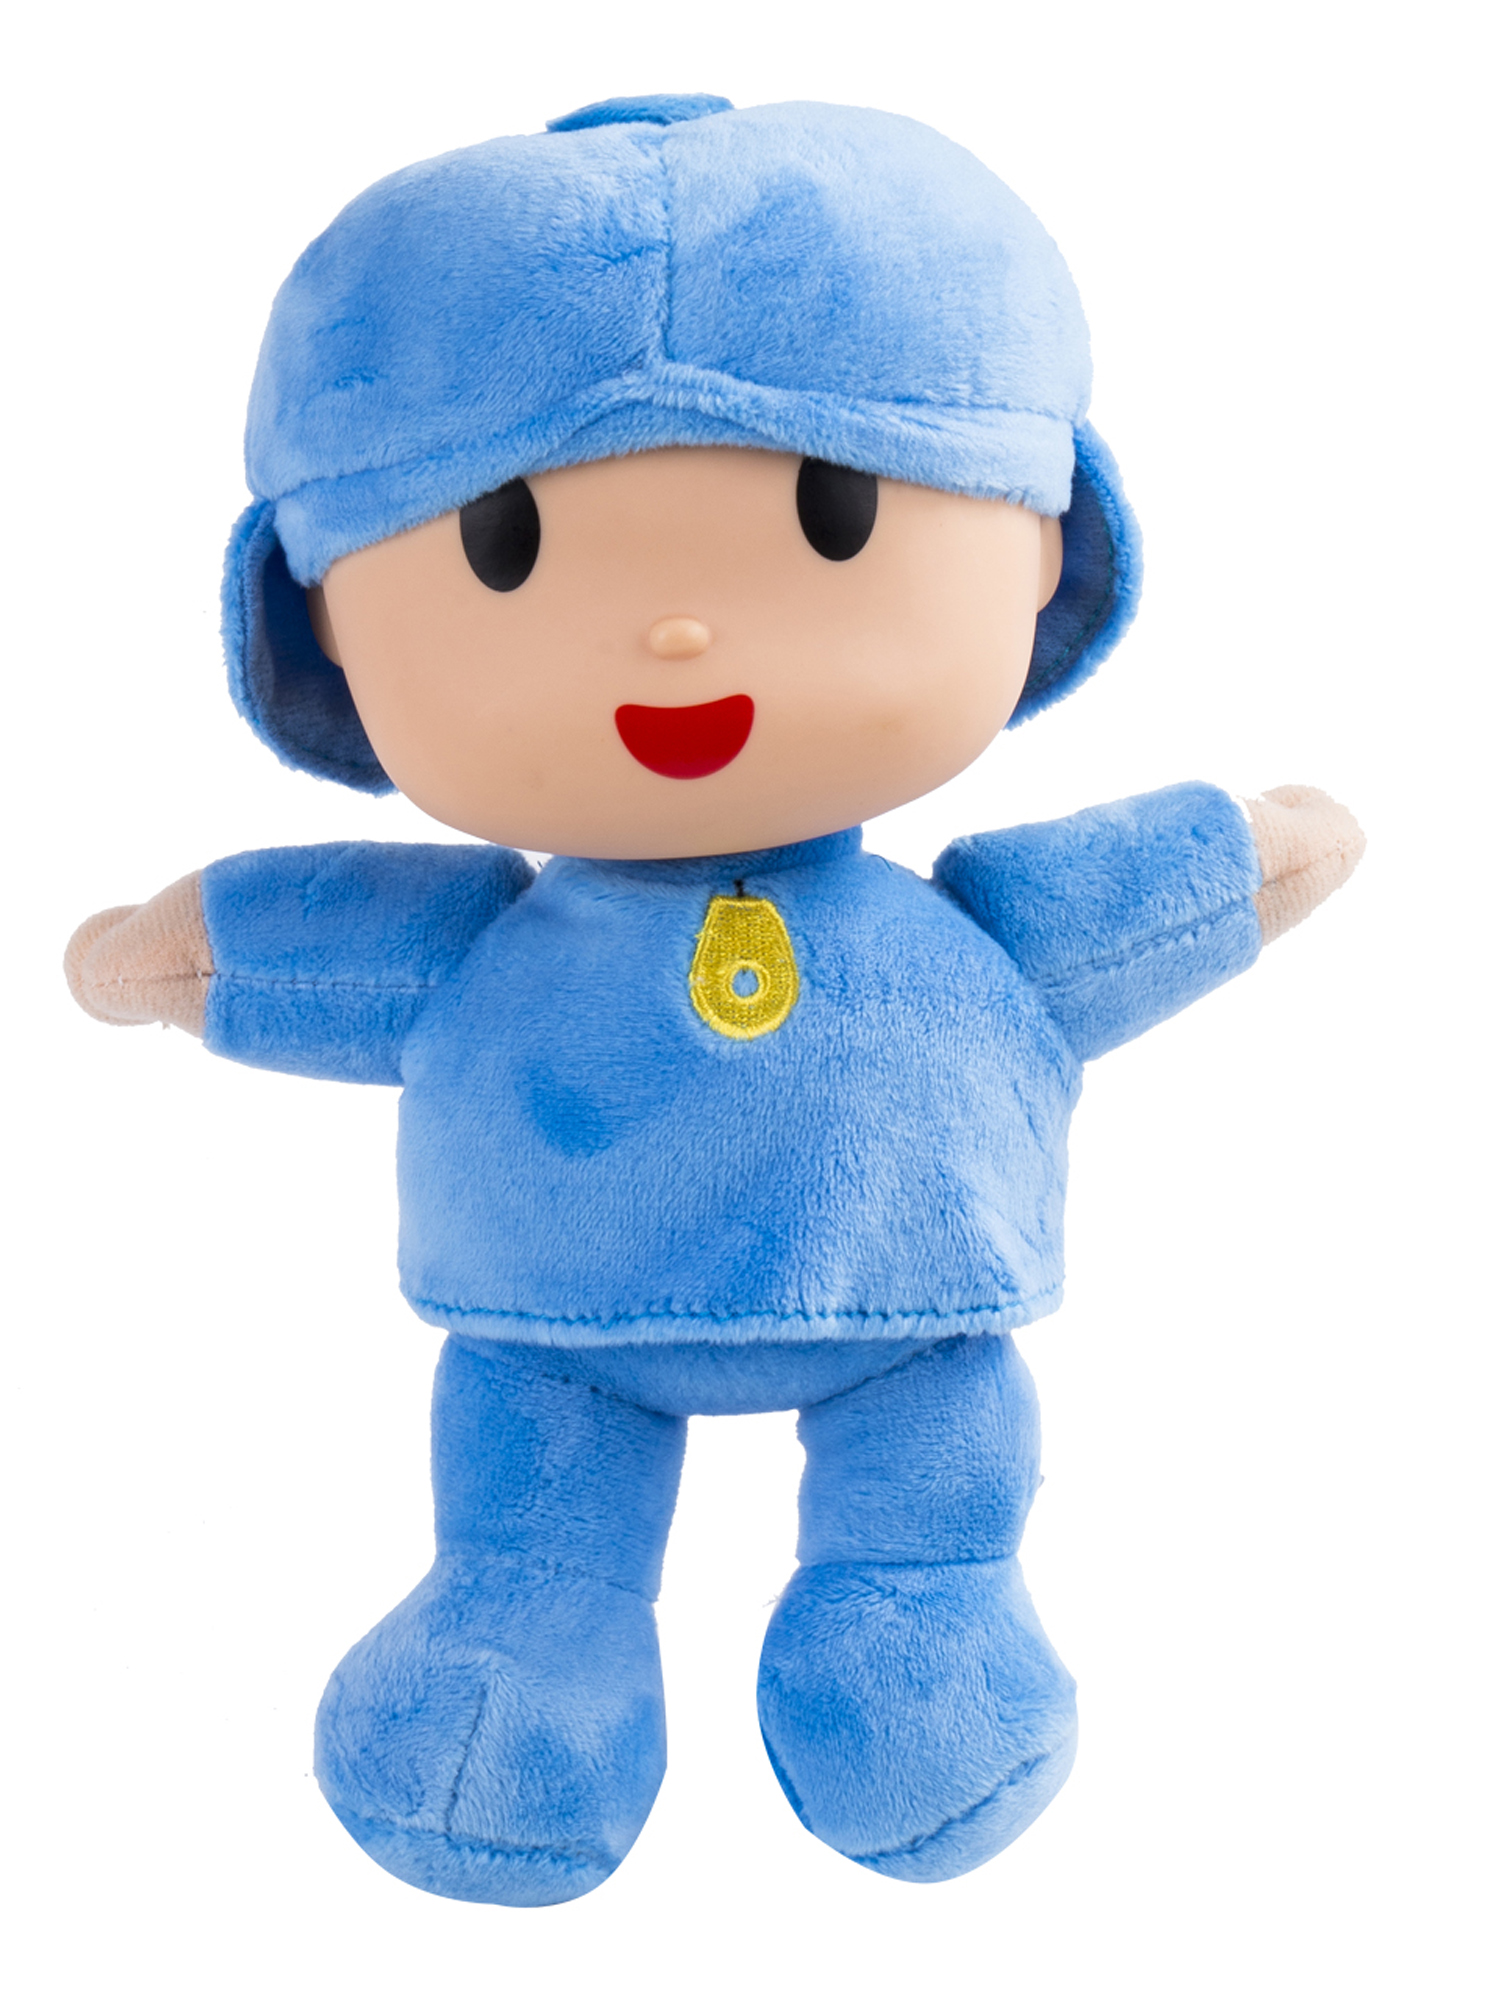 Set Of 6 Pcs Pocoyo Elly Pato Loula Soft Plush Stuffed Figure Toy Doll Gift